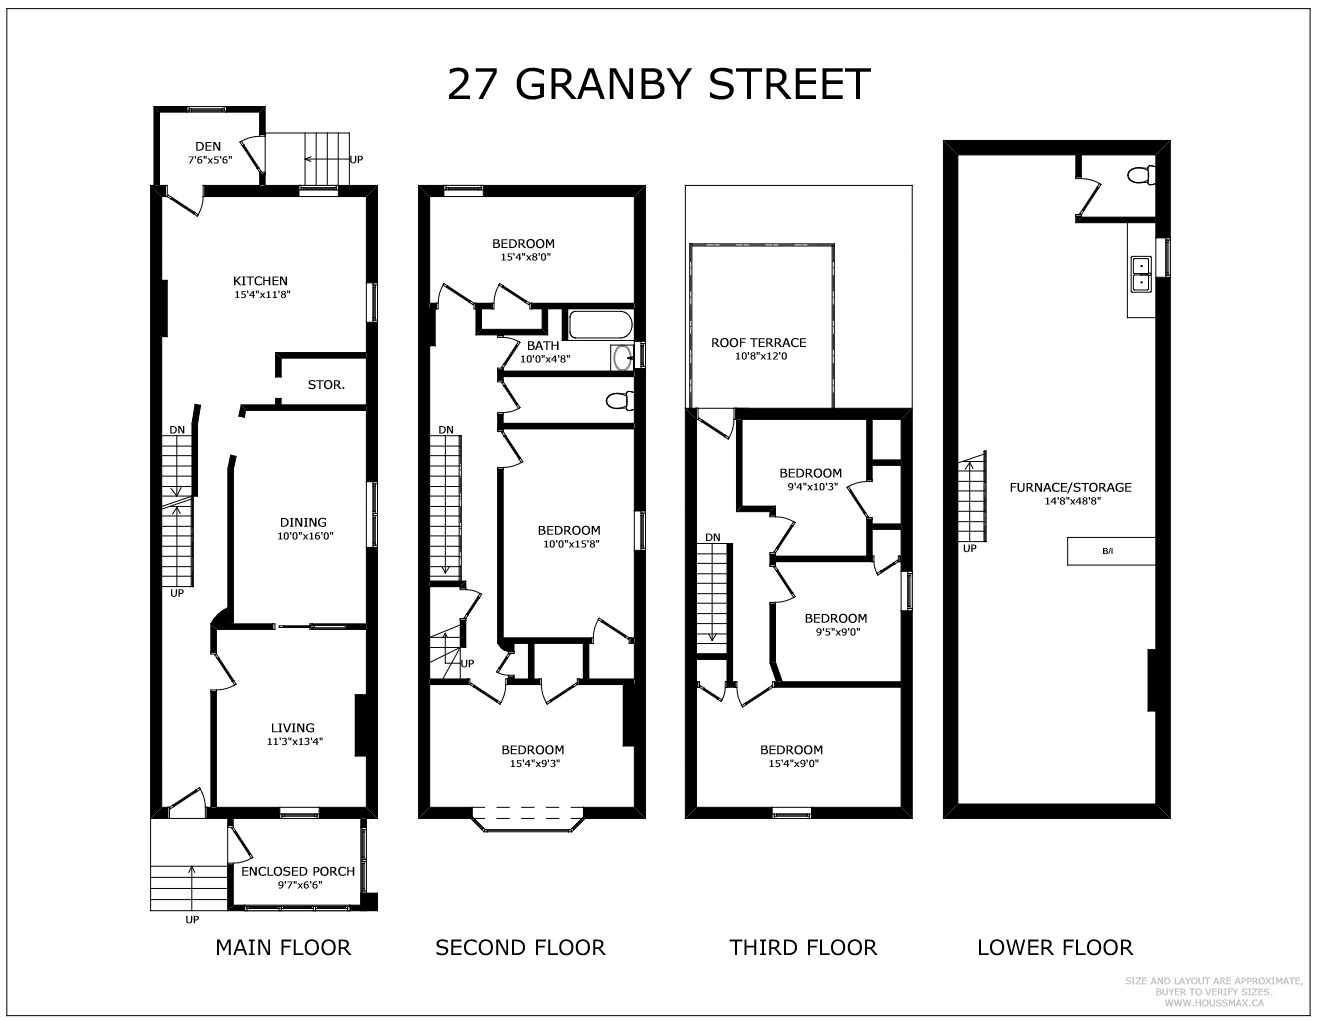 27 Granby Street Floor Plans